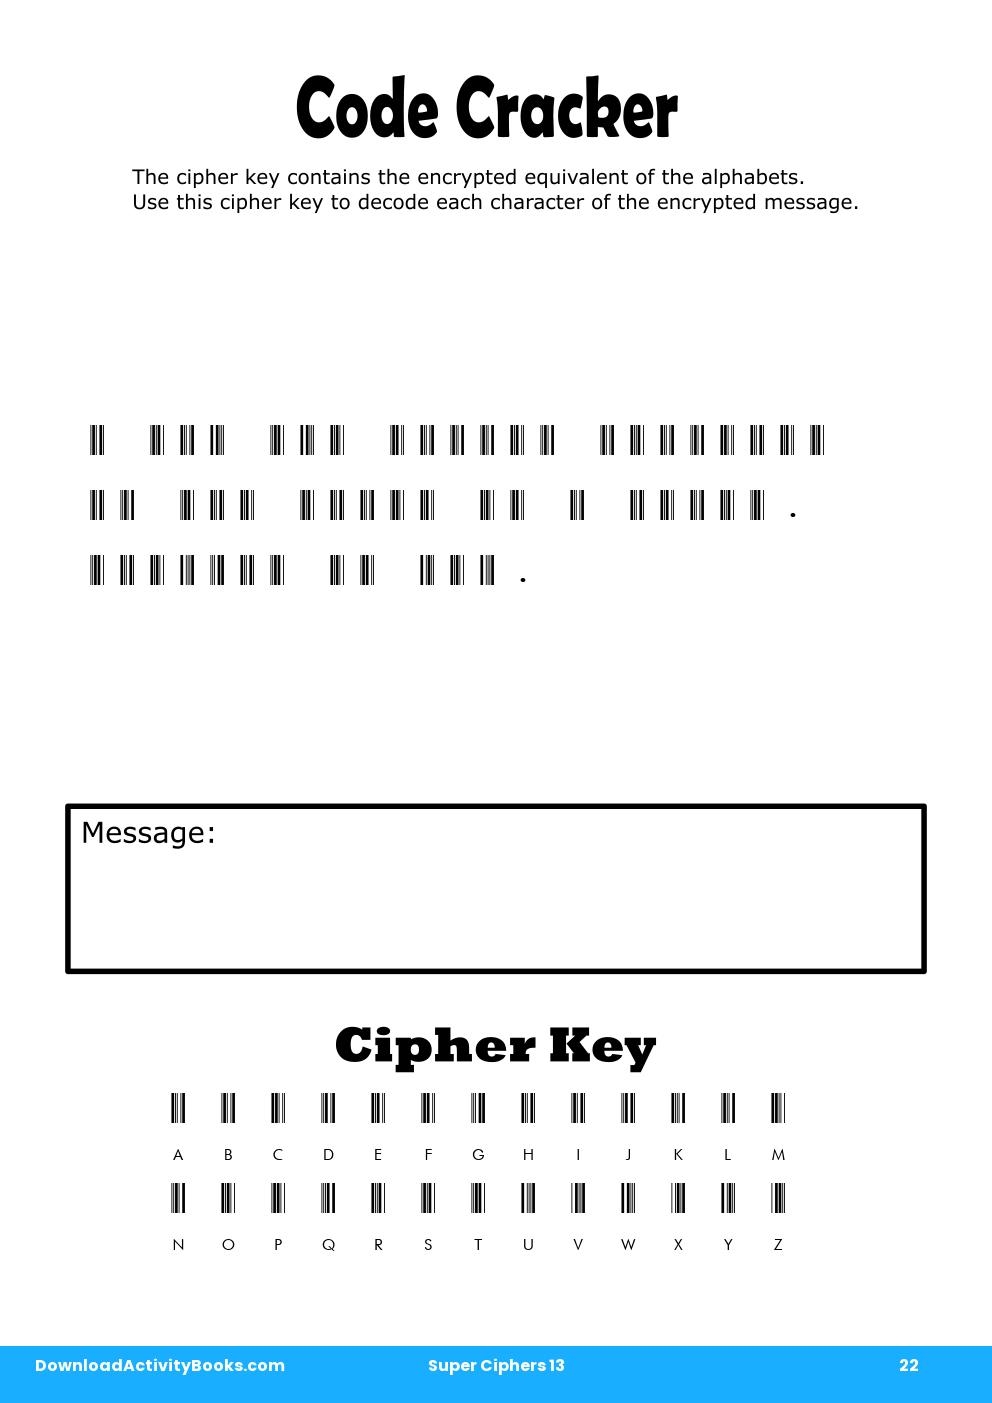 Code Cracker in Super Ciphers 13